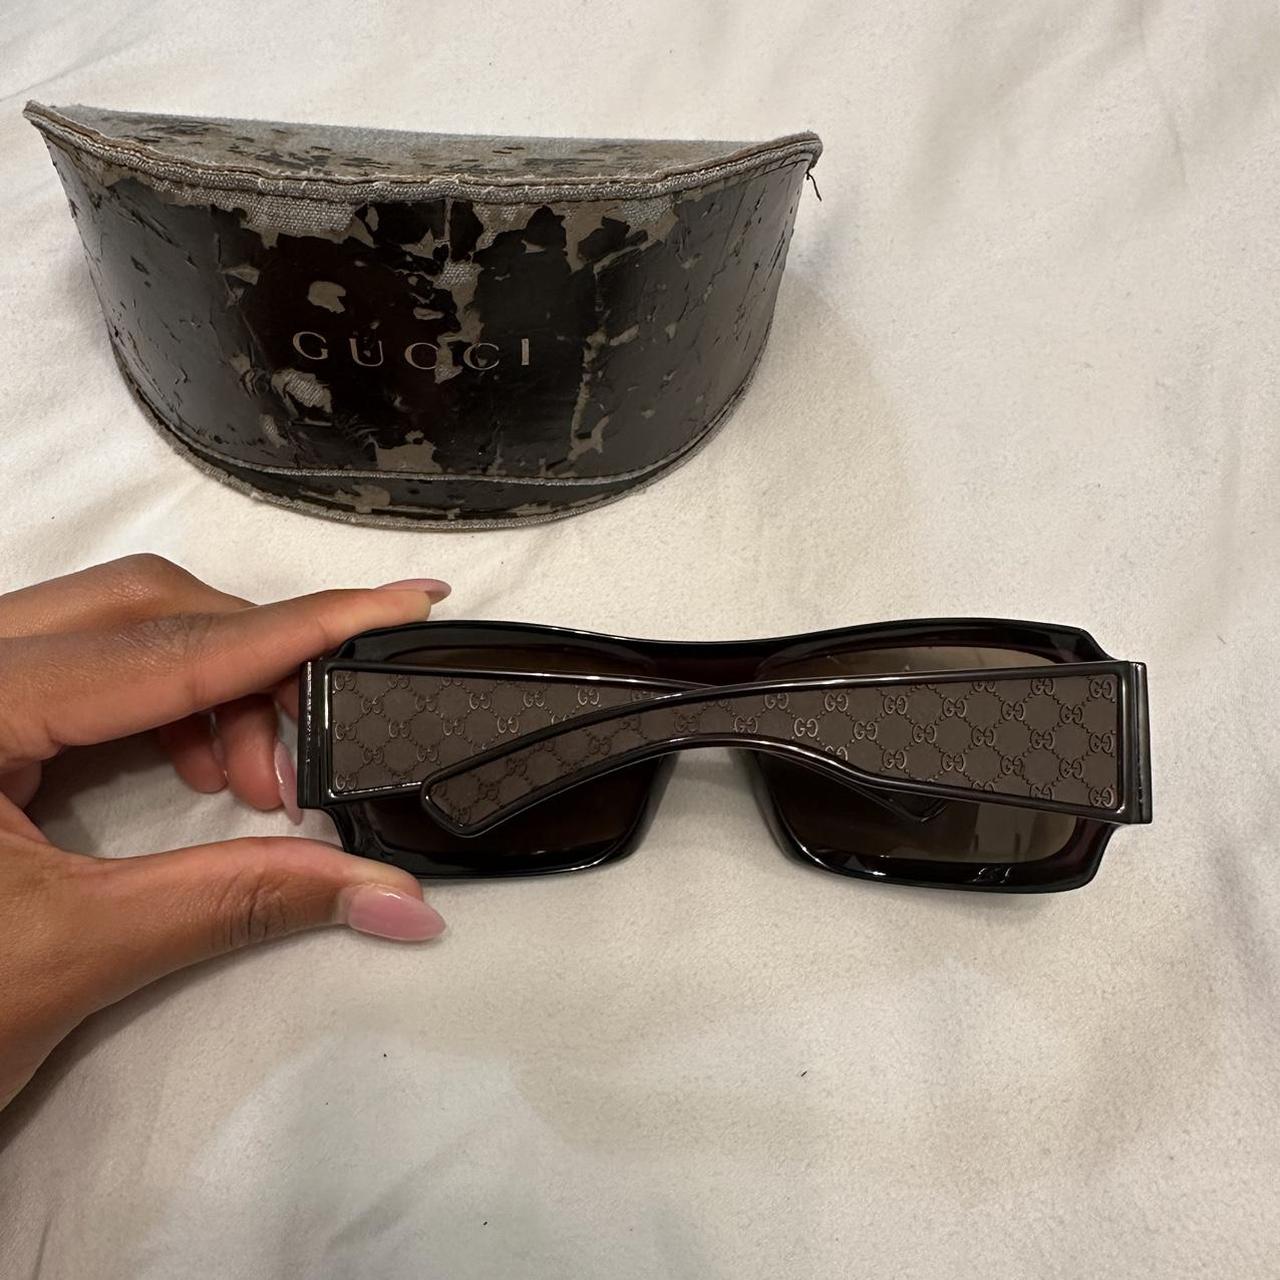 Gucci Red Velvet Sunglass Glasses Case Thank You - Depop